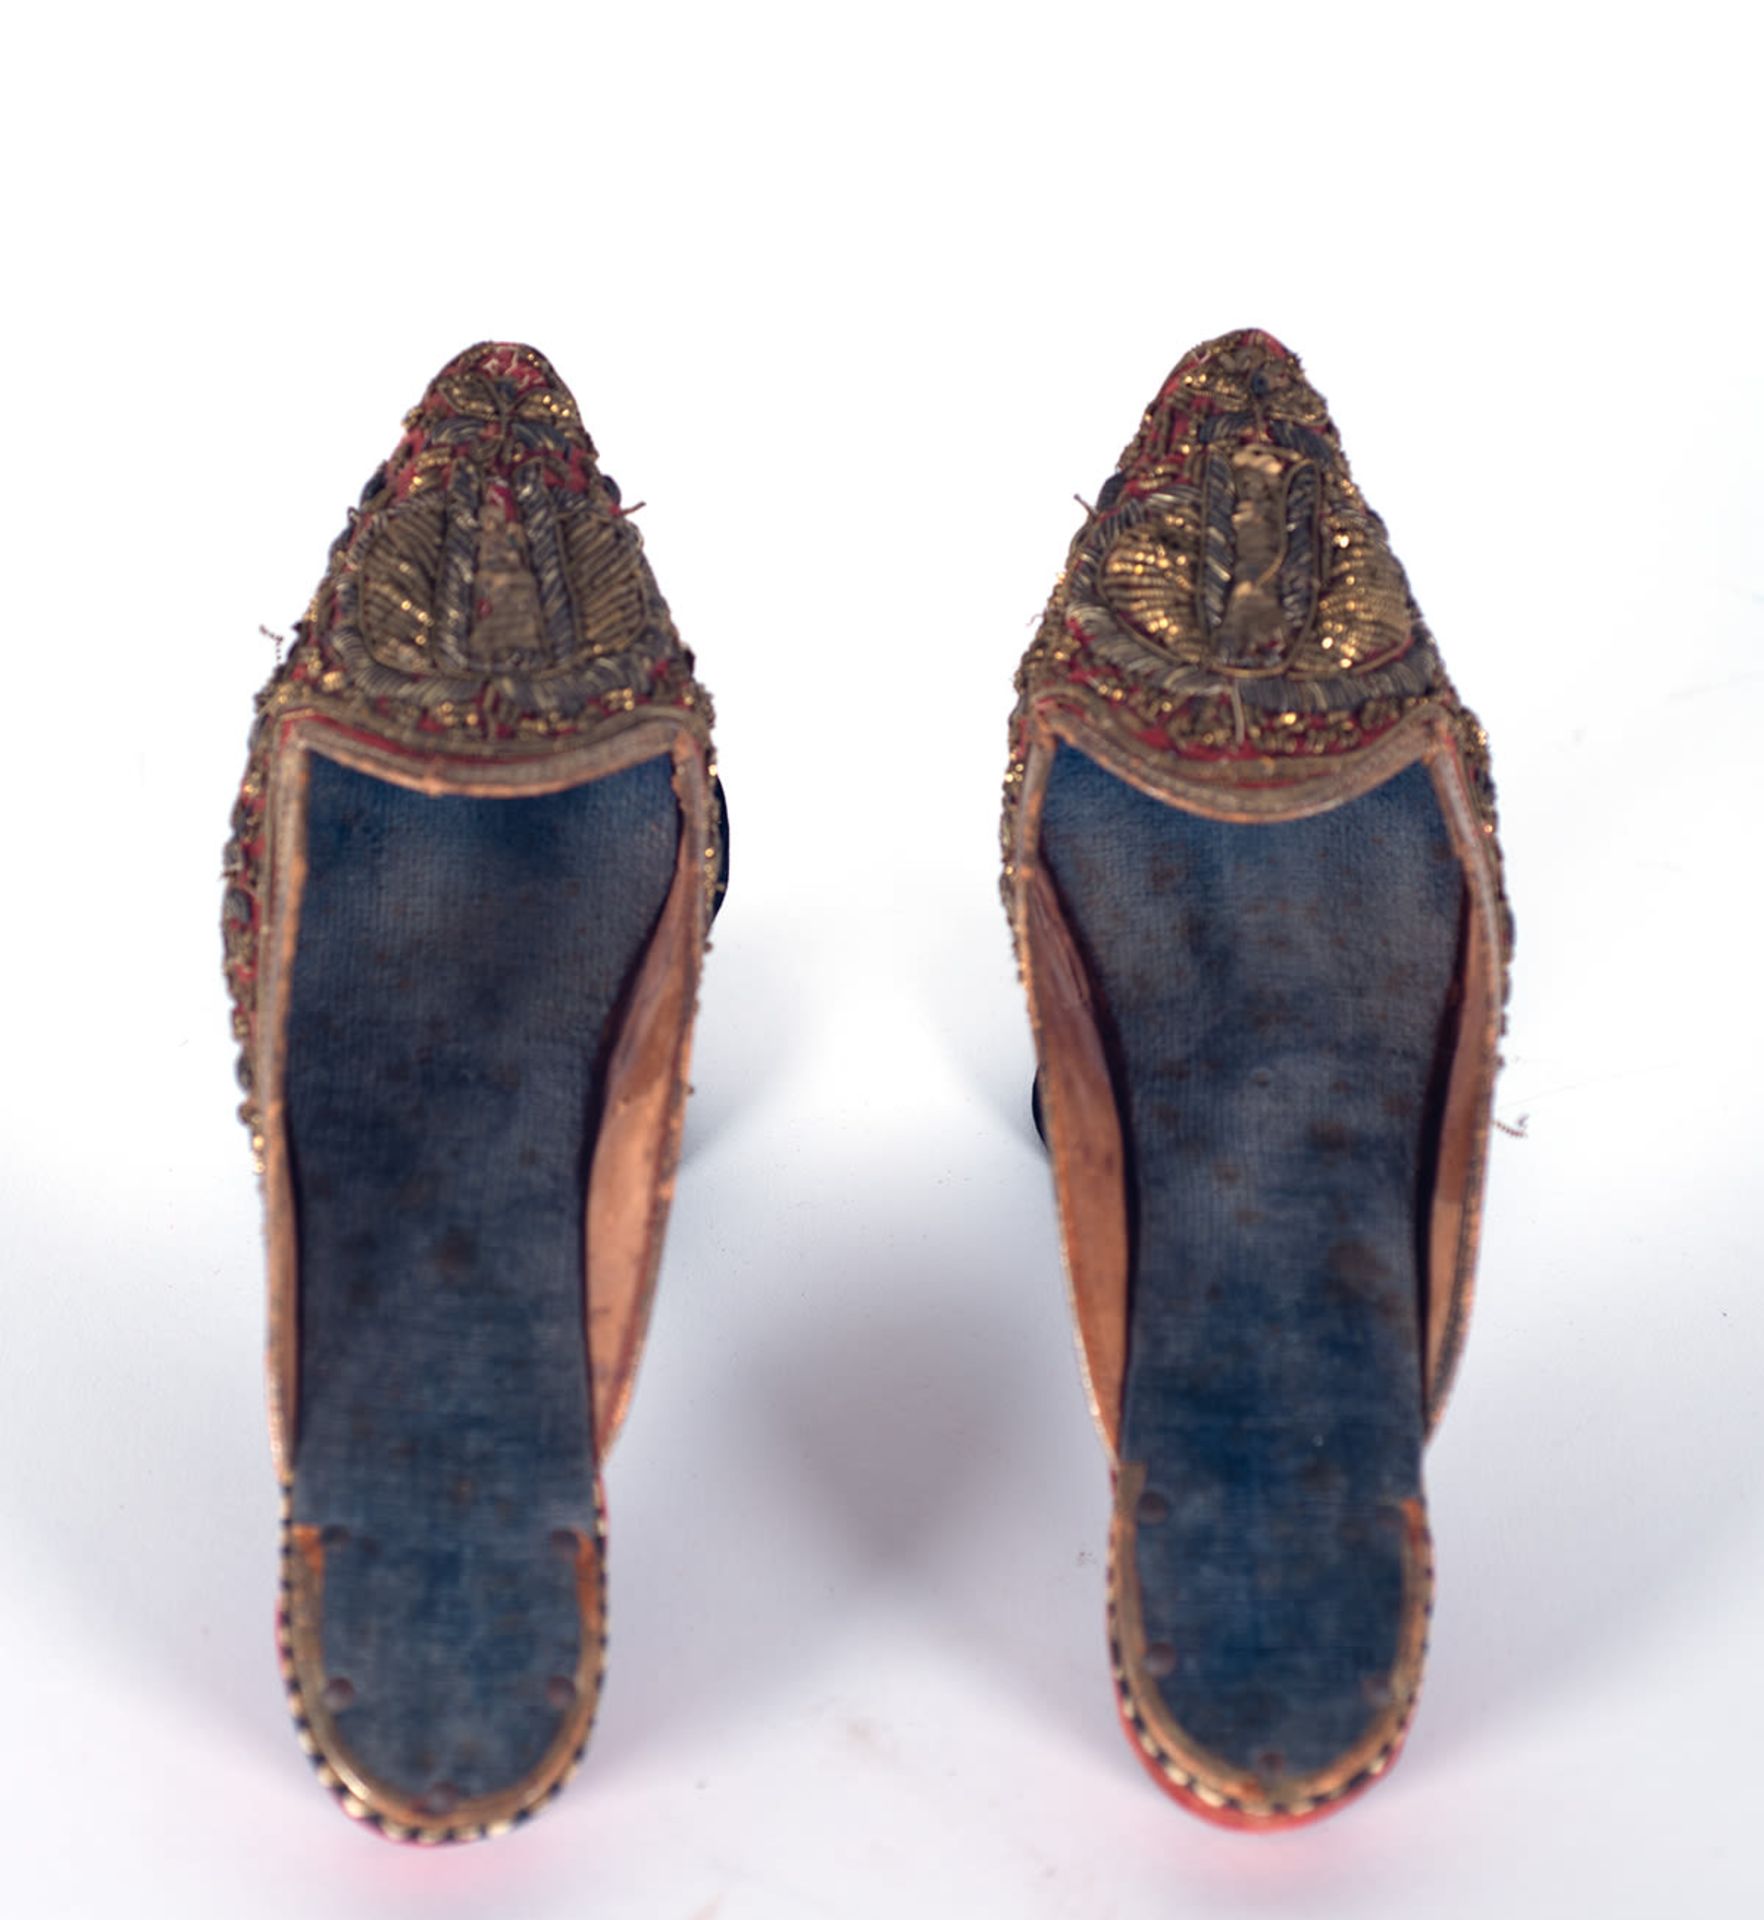 Venetian shoe pair, 18th century